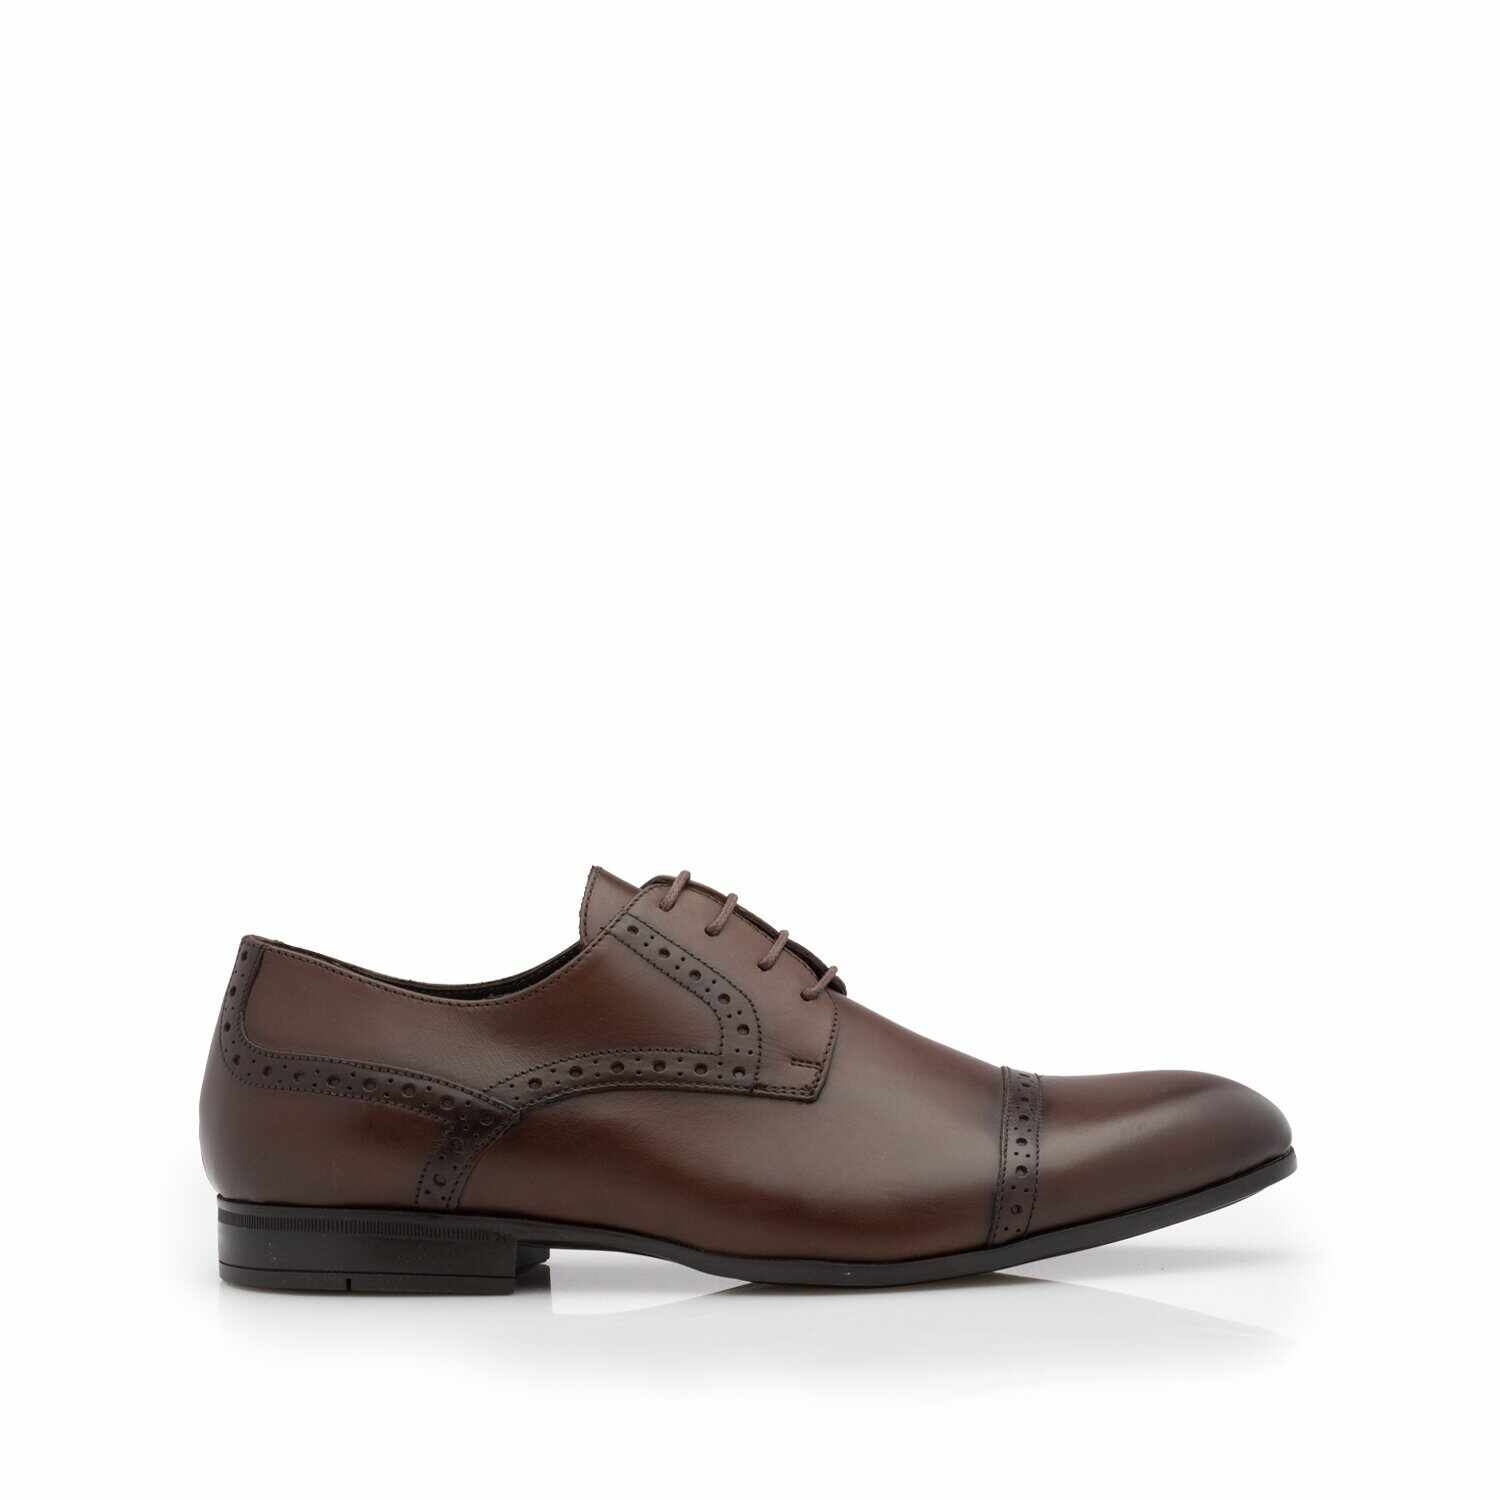 Pantofi barbati eleganti din piele naturala,Leofex -1022 Maro Box